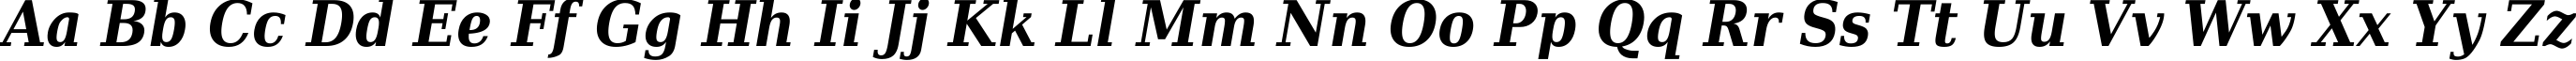 Пример написания английского алфавита шрифтом DejaVu Serif Condensed Bold Italic